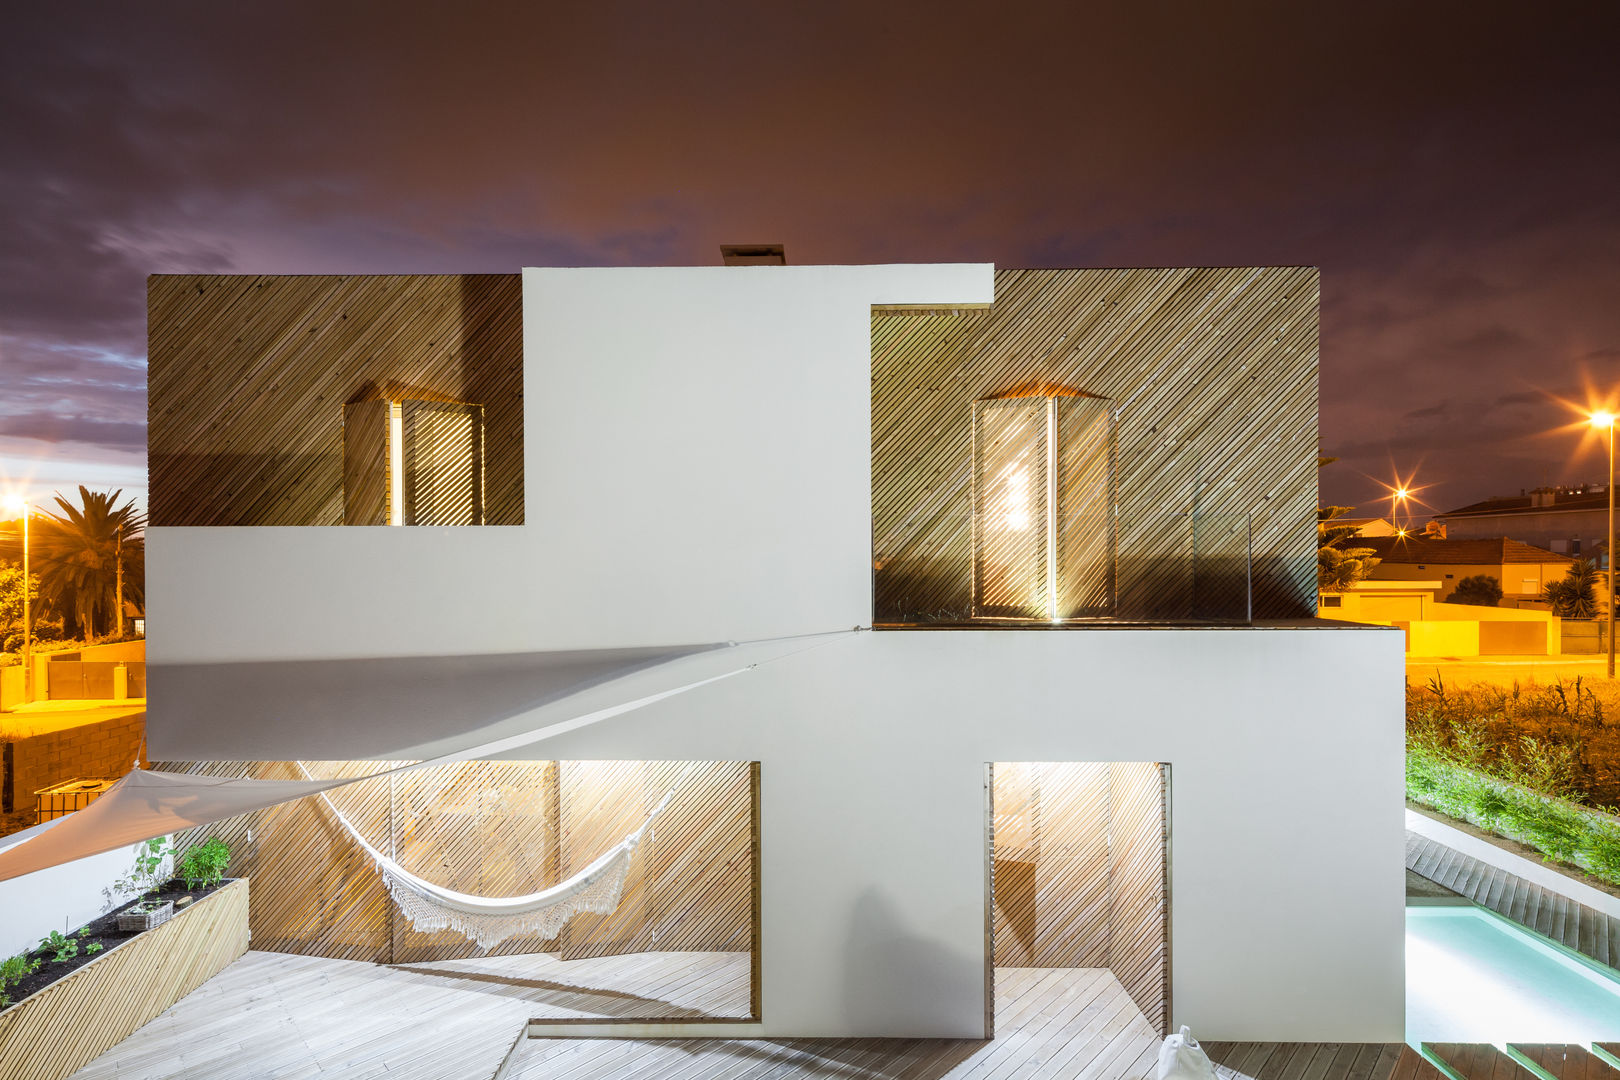 SilverWoodHouse, Joao Morgado - Architectural Photography Joao Morgado - Architectural Photography Modern houses